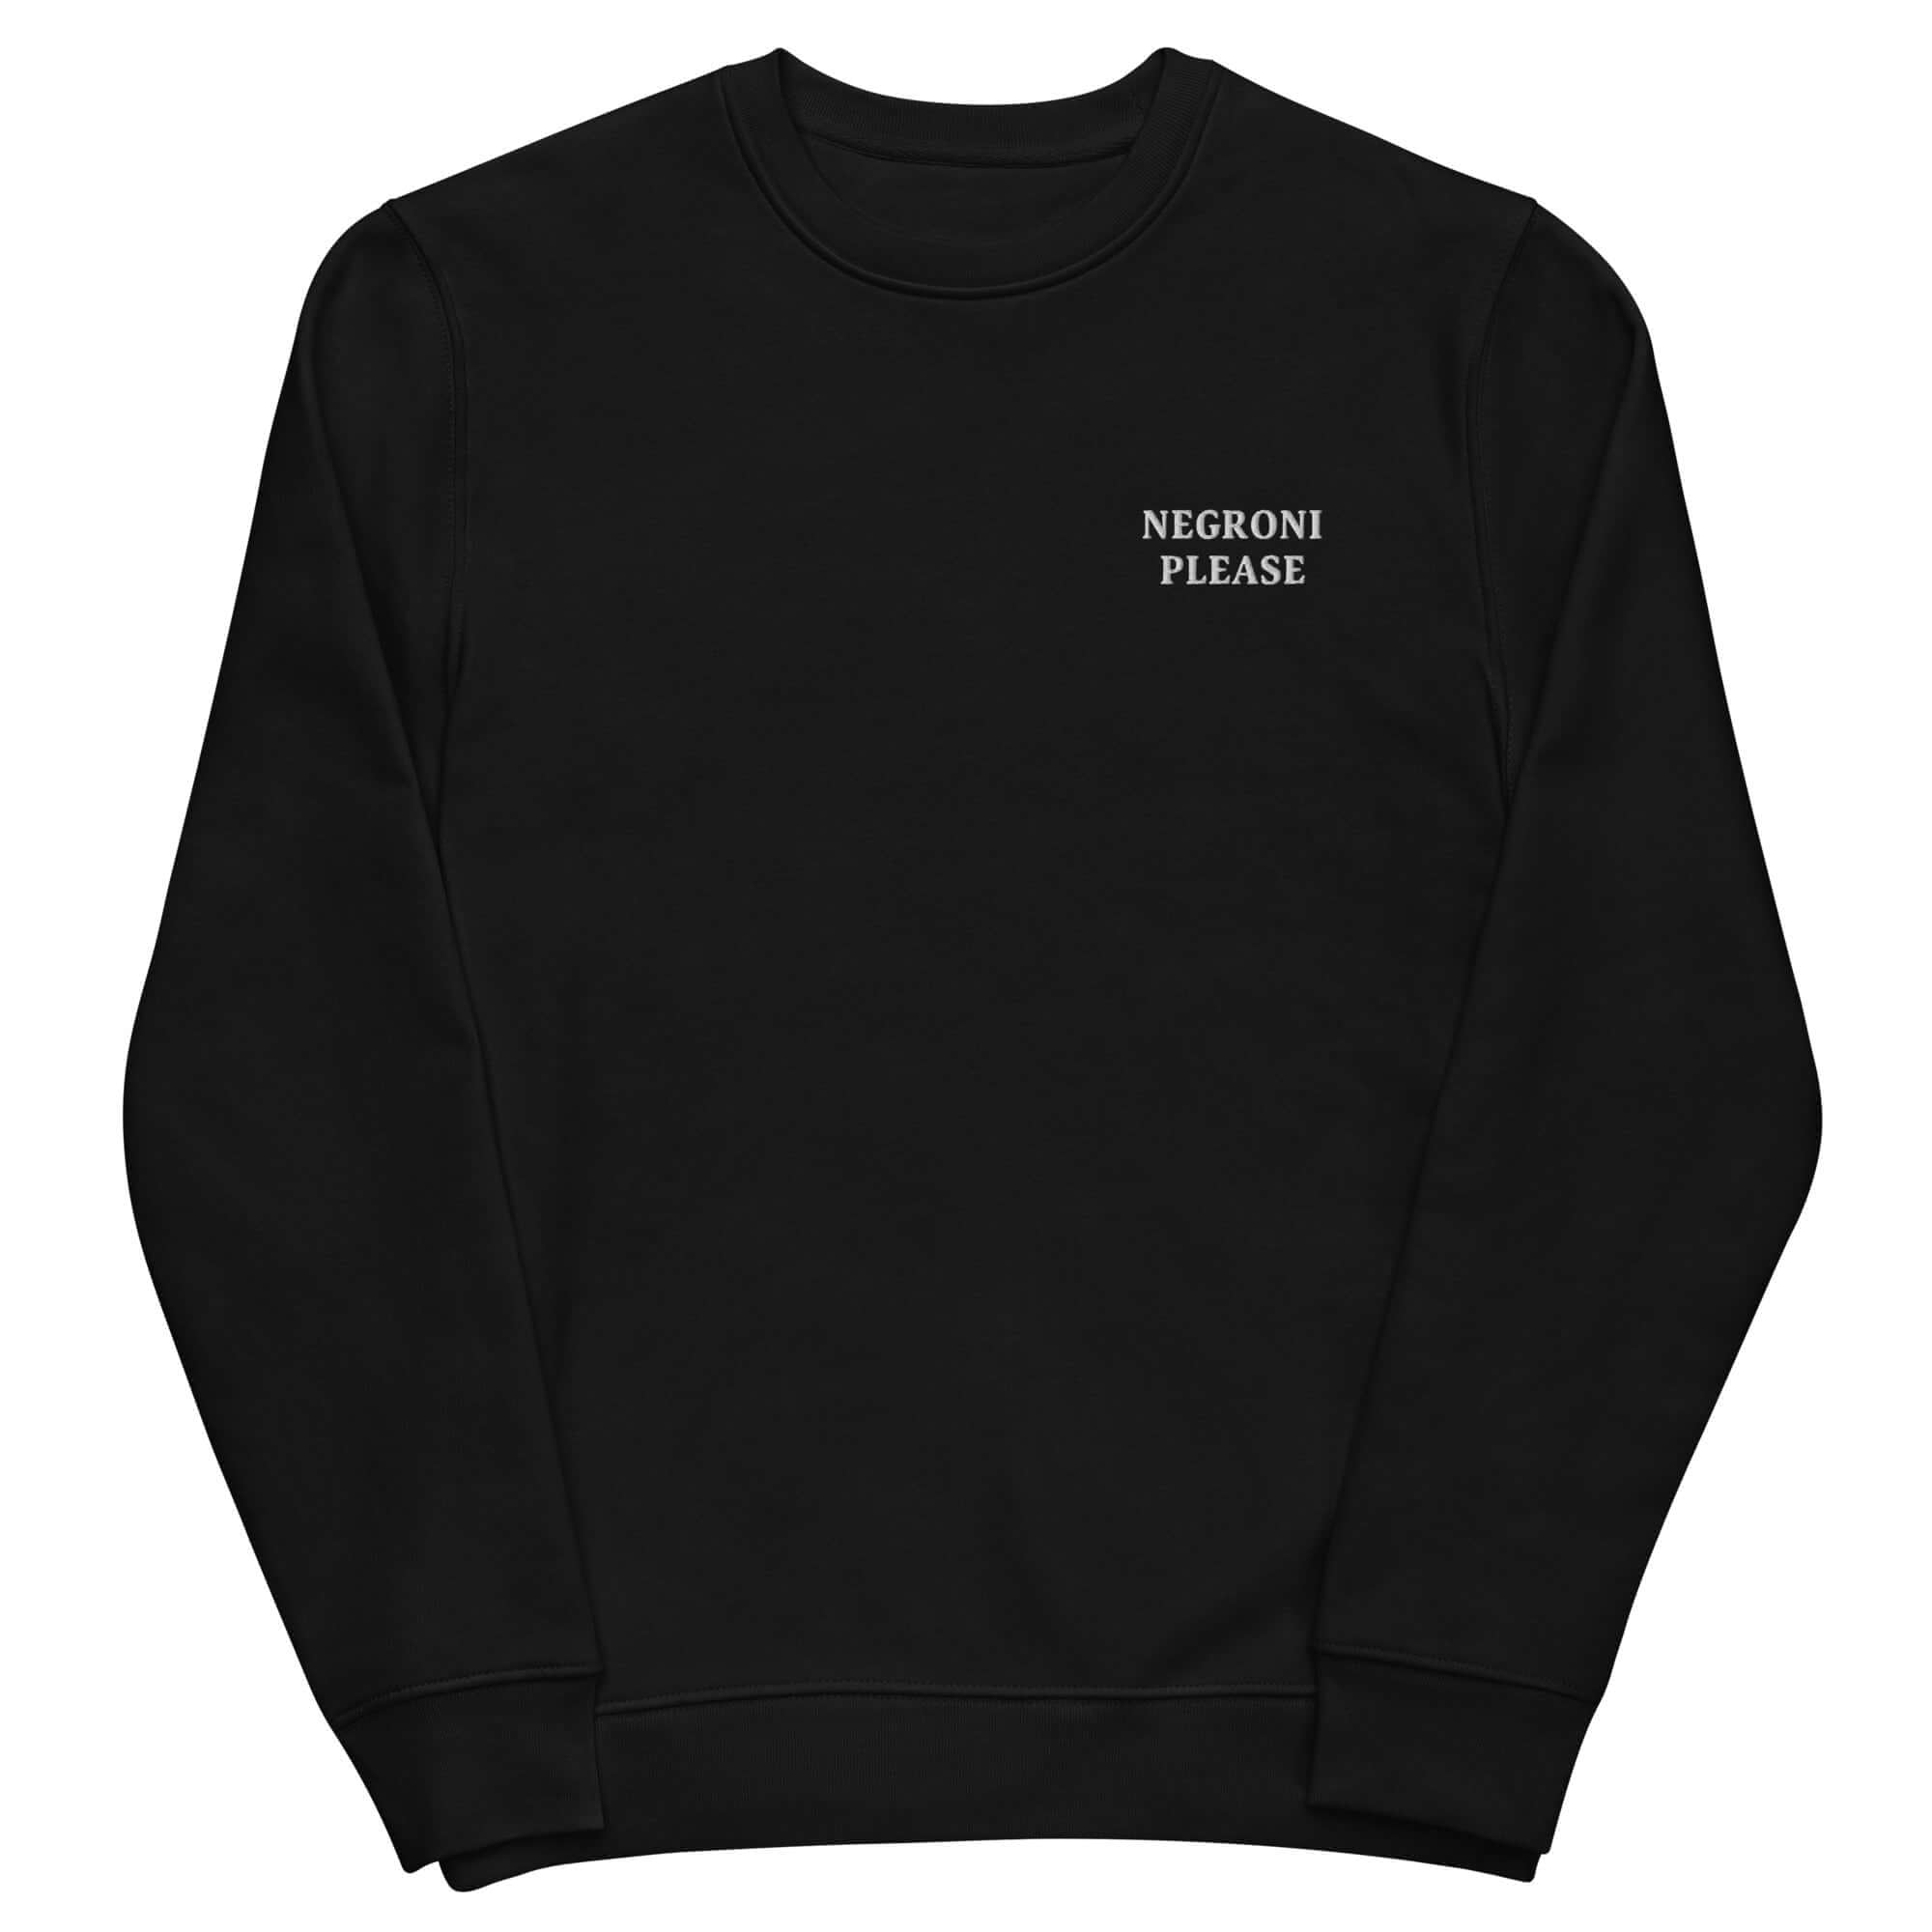 Negroni Please - Organic Embroidered Sweatshirt - The Refined Spirit